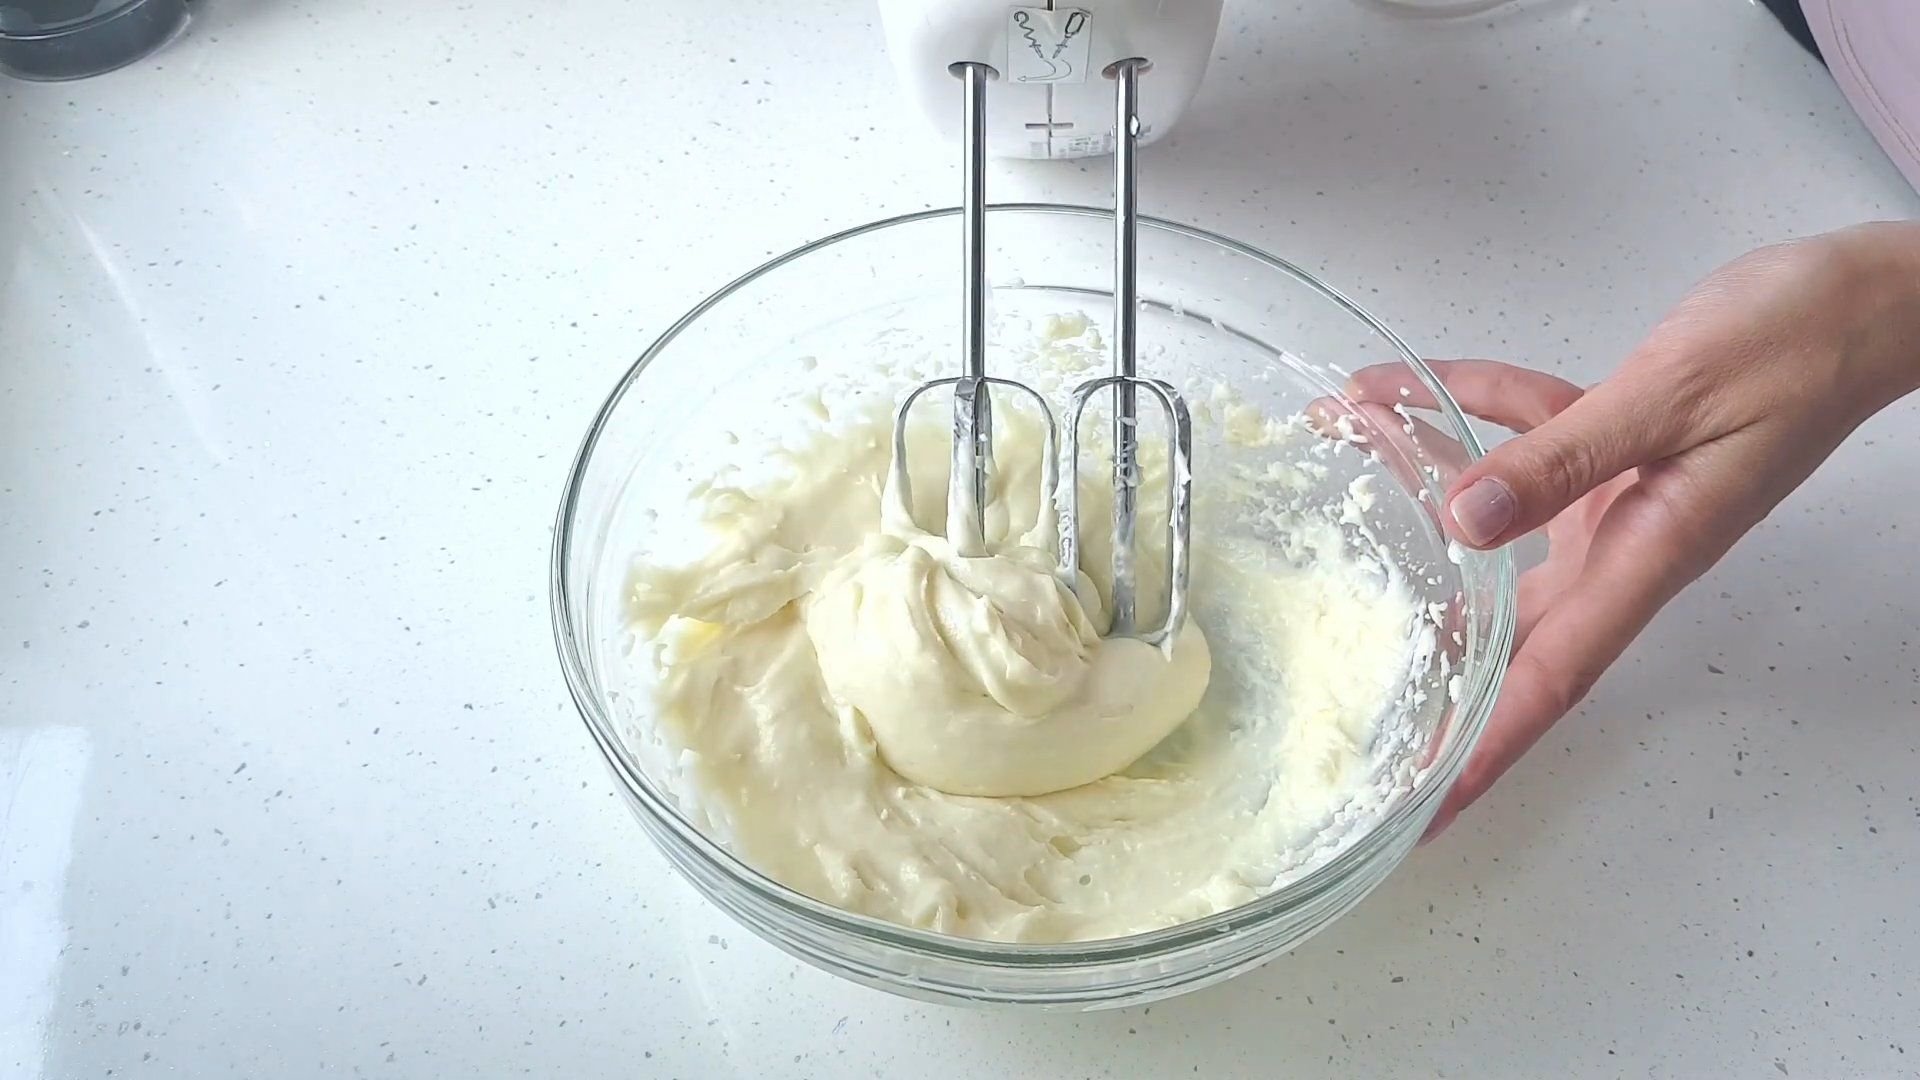 Крем пломбир со сливками для торта рецепт с фото пошагово в домашних условиях